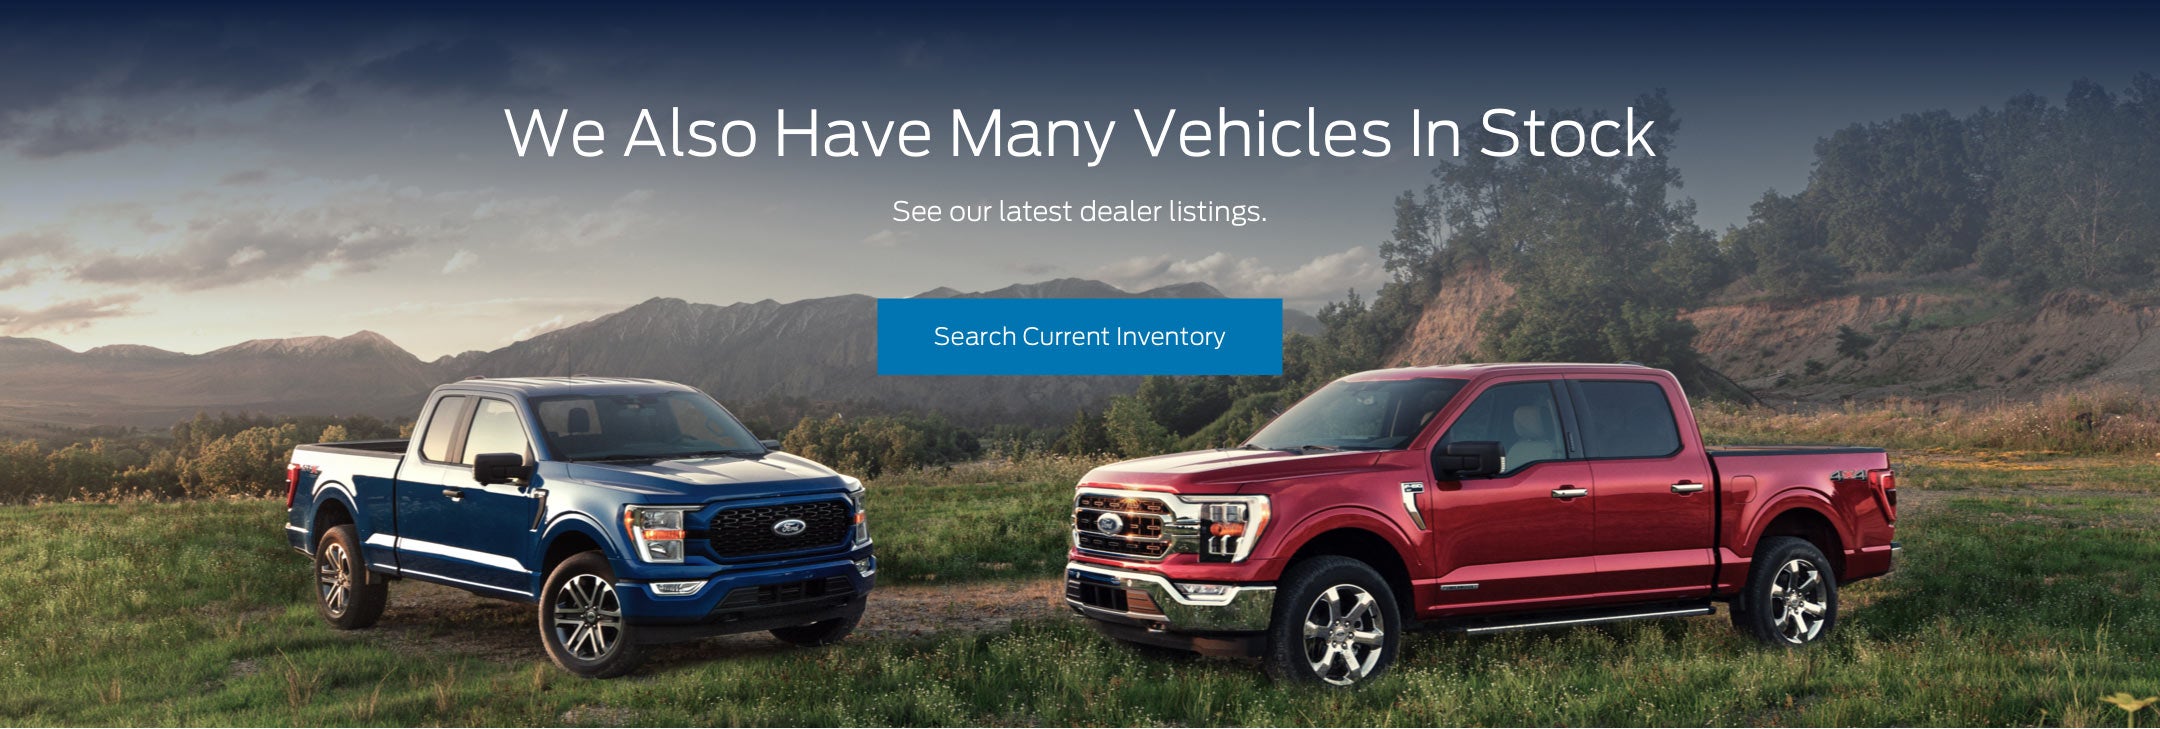 Ford vehicles in stock | Murray Ford of Kingsland, Inc. in Kingsland GA